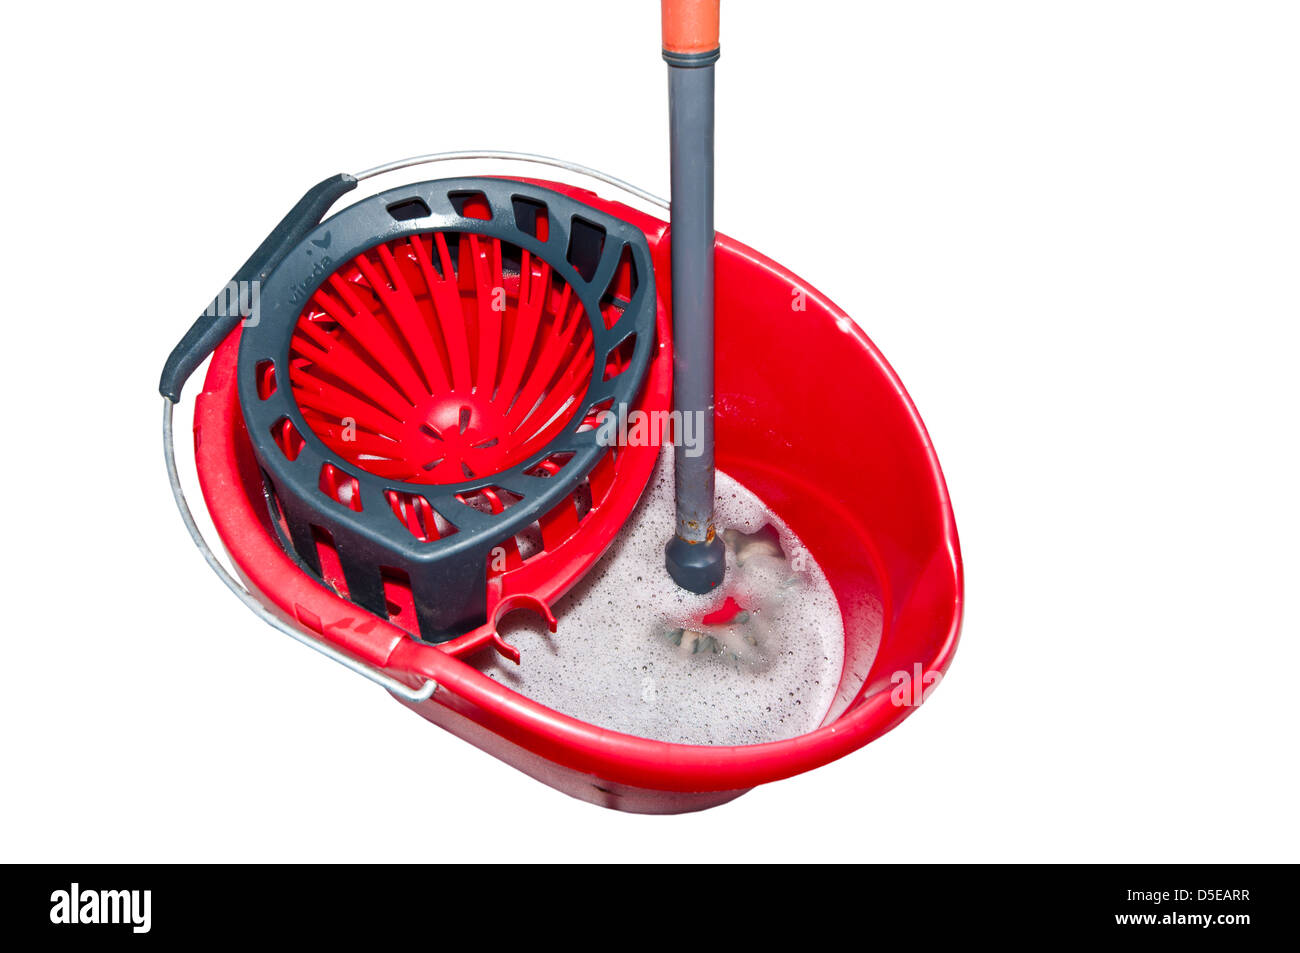 https://c8.alamy.com/comp/D5EARR/plastic-kitchen-mop-and-bucket-D5EARR.jpg